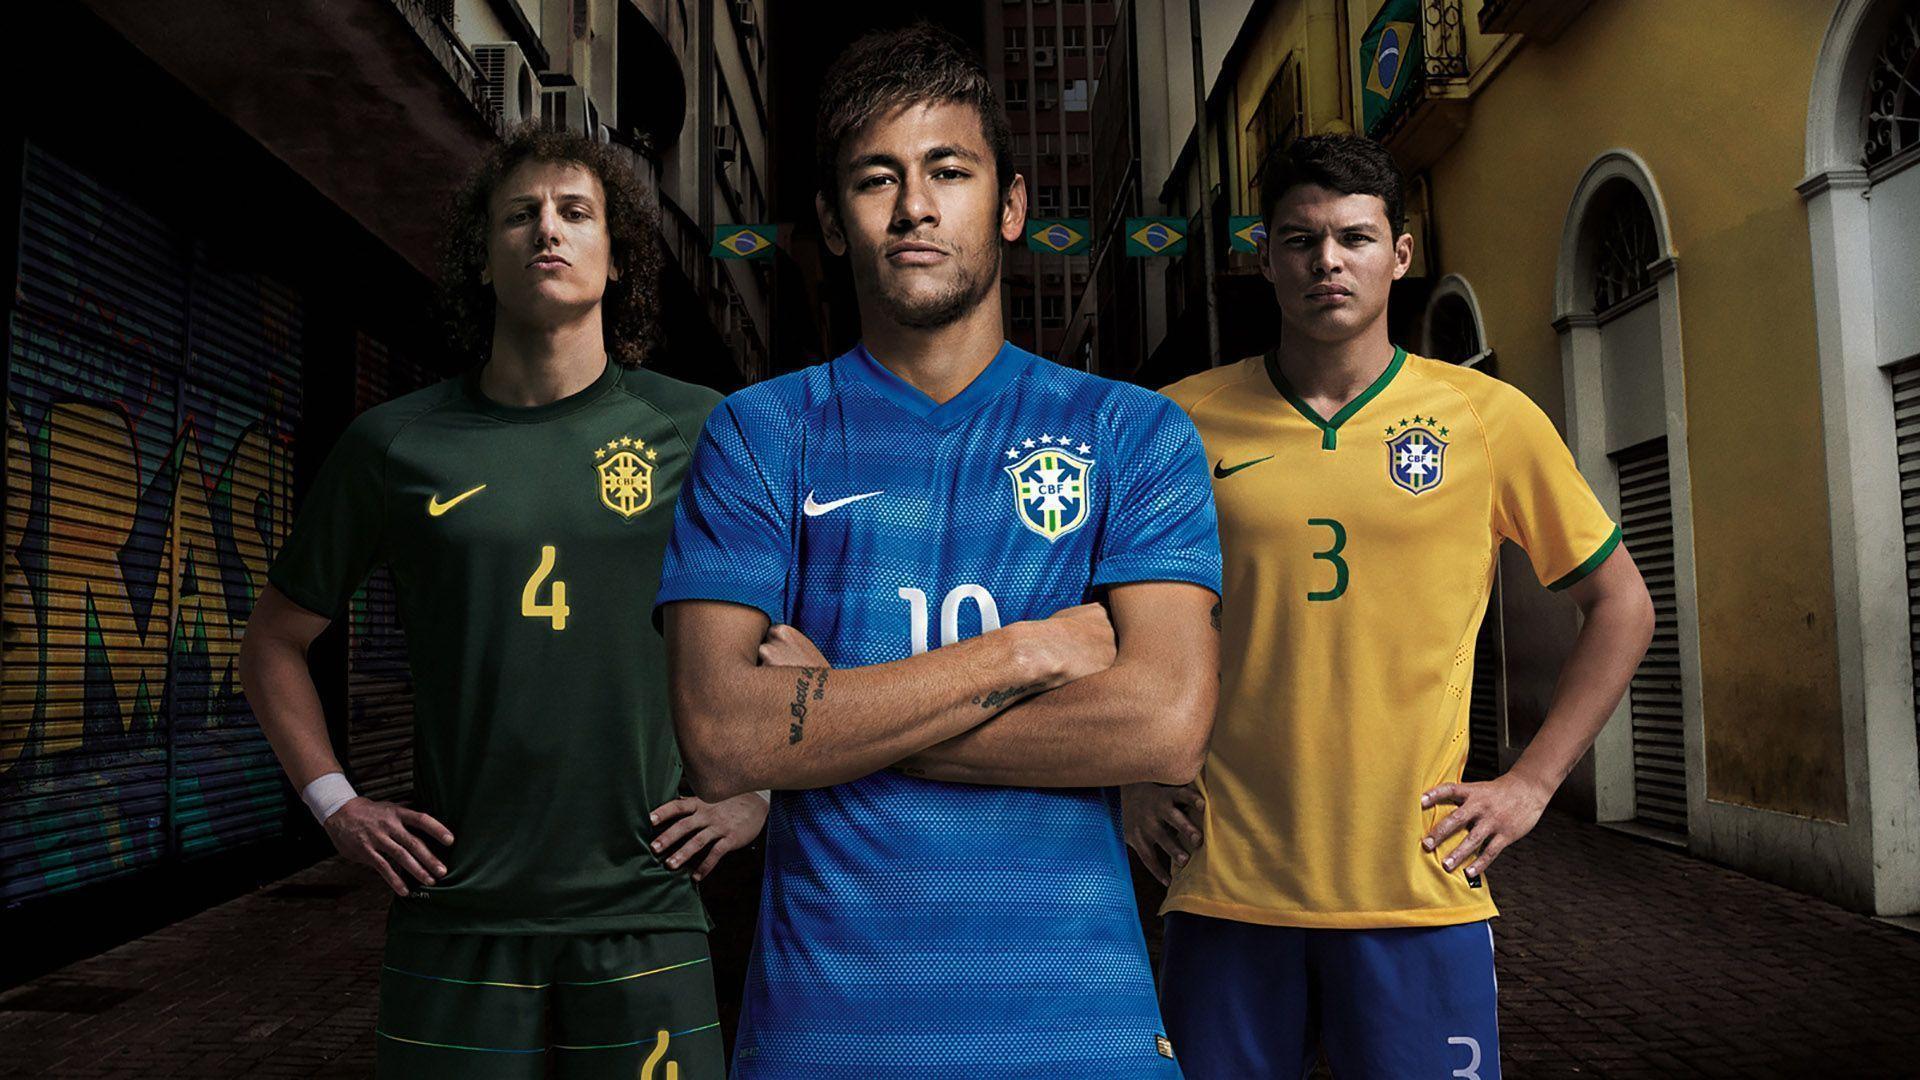 Brazil Football Team 2014 World Cup Kit Wallpaper Wide or HD